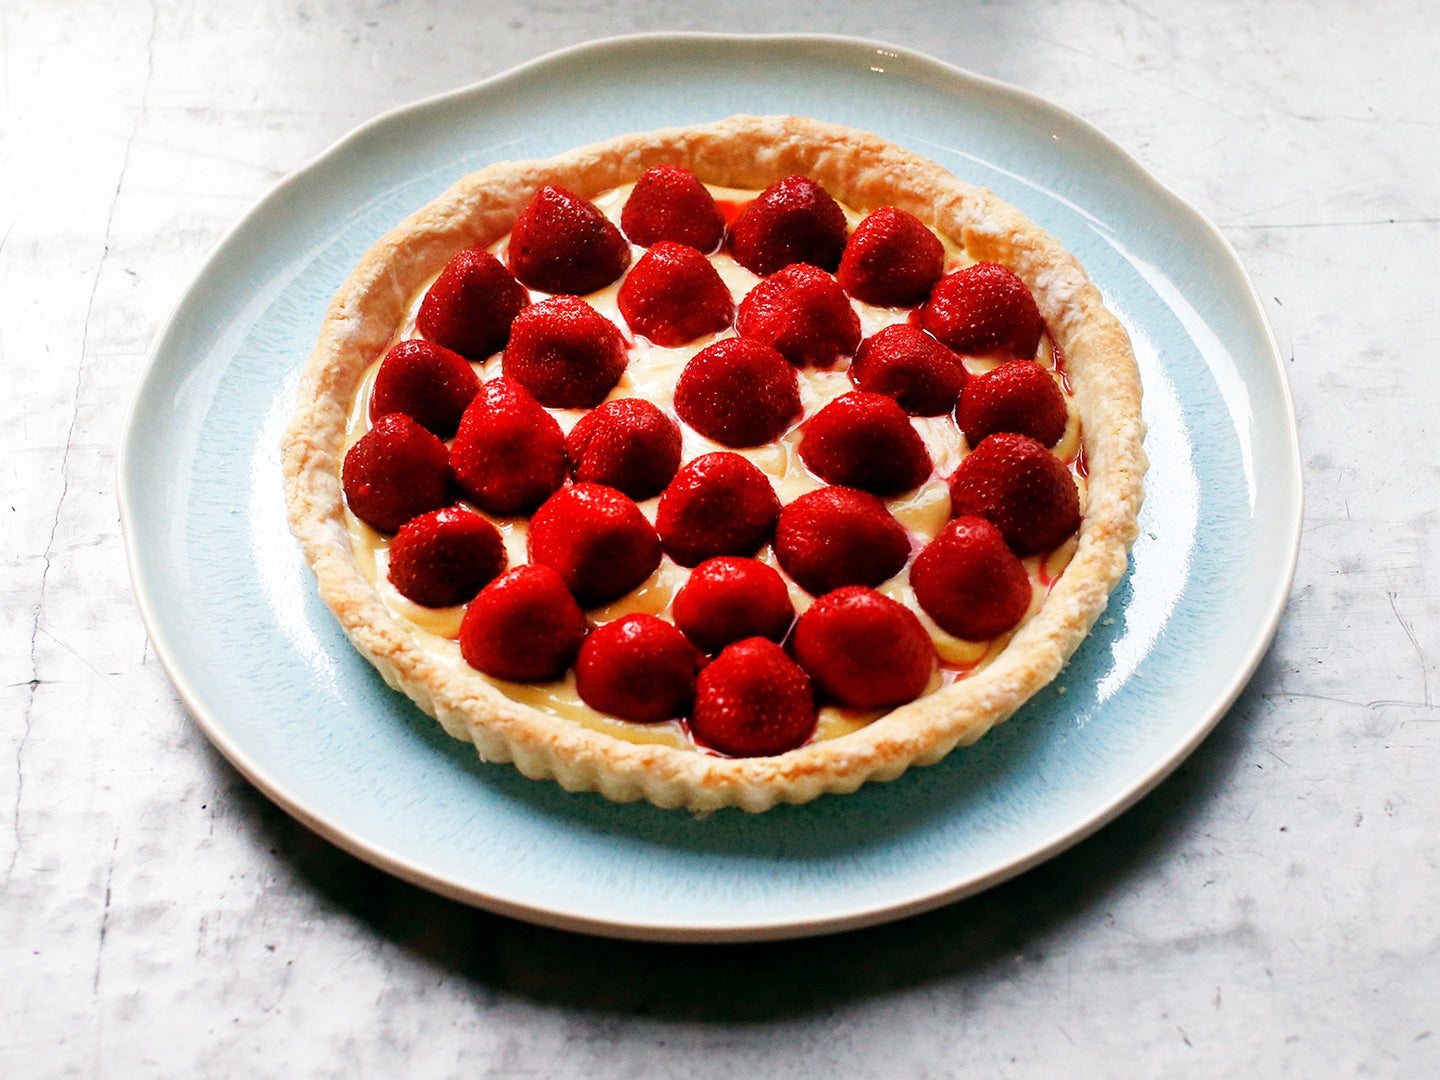 [Strawberry Tart](/article/Recipes/Strawberry-Tart/)